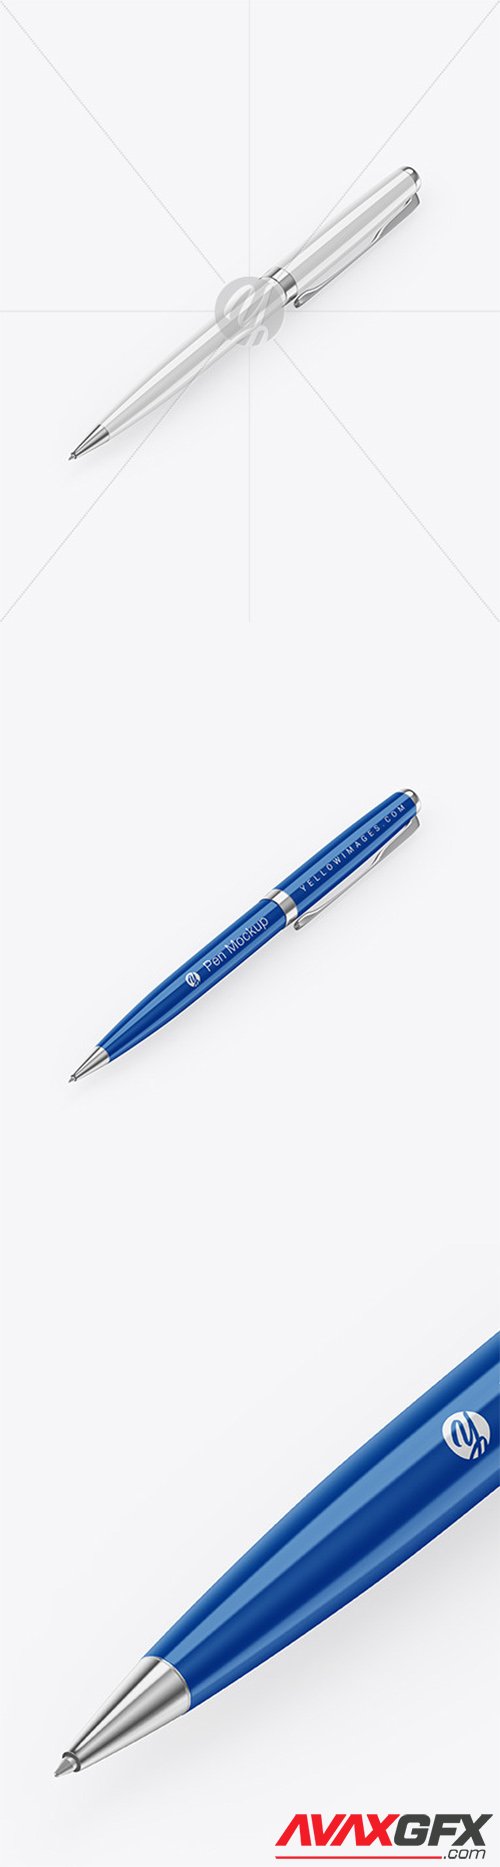 Glossy Pen w/ Metallic Finish Mockup 65958